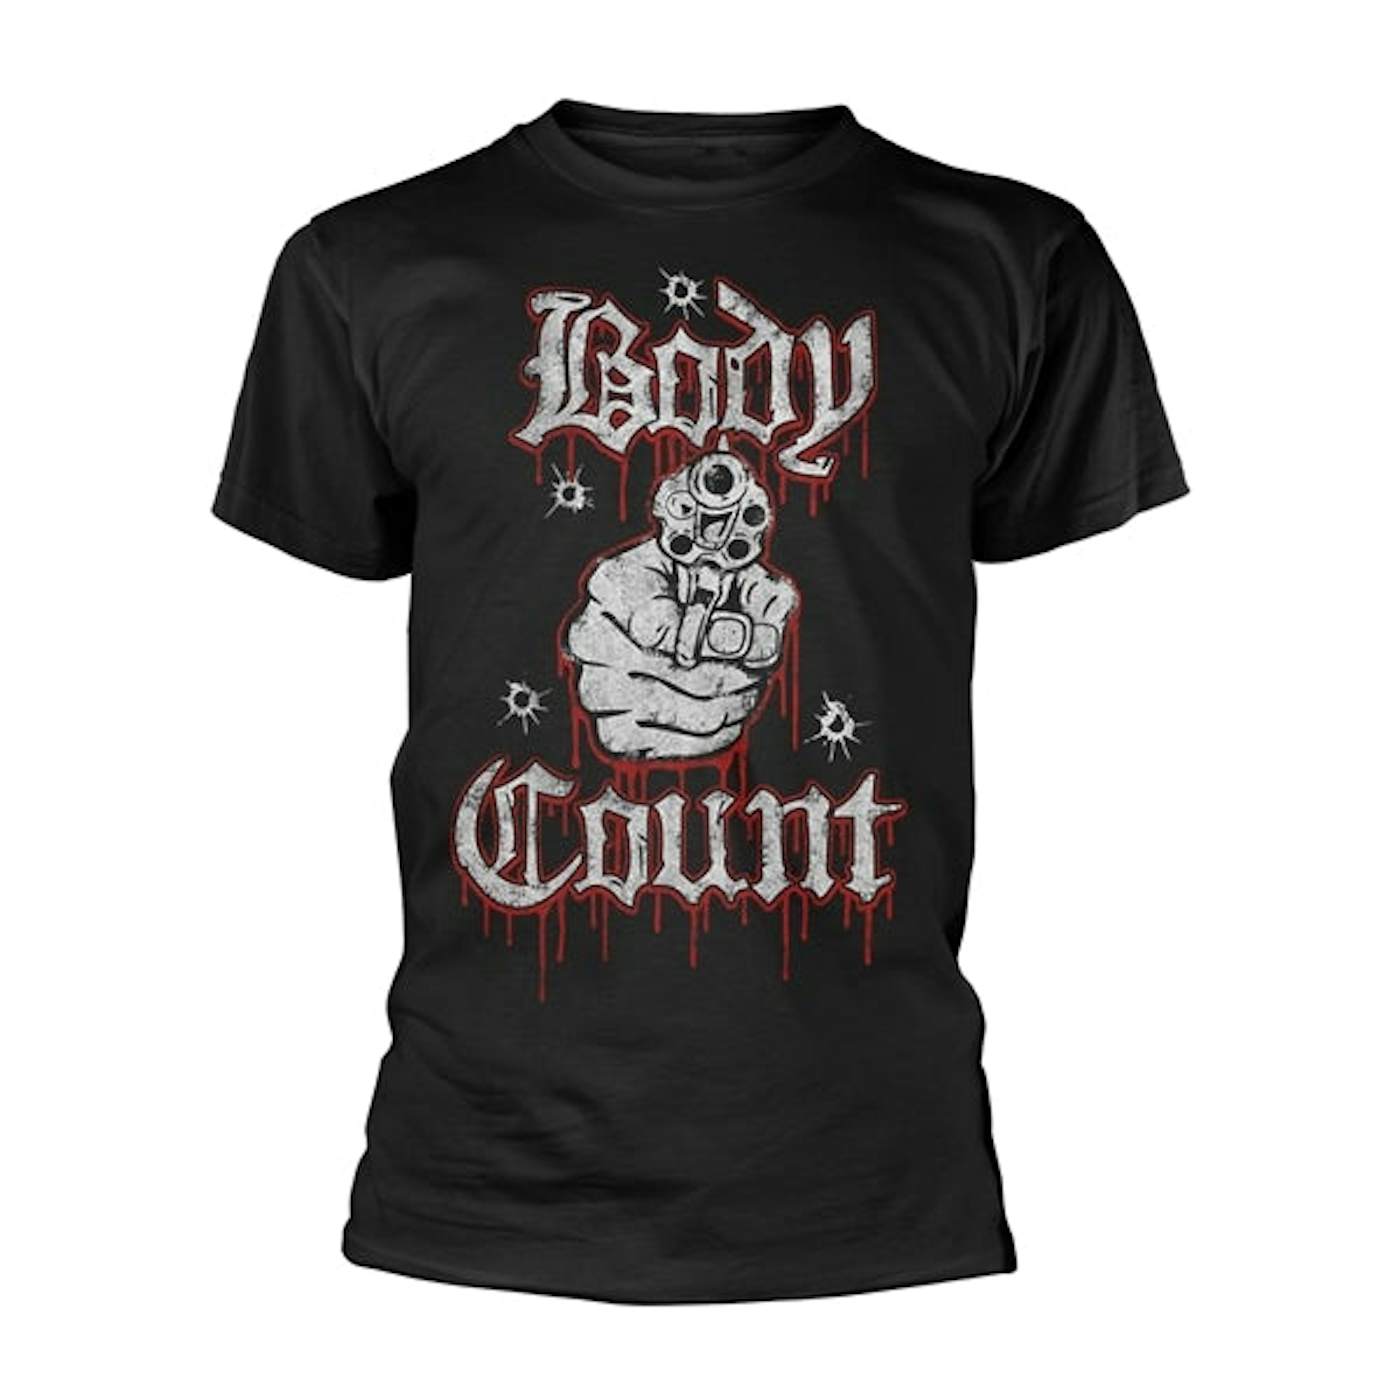 Body Count T Shirt - Talk Shit